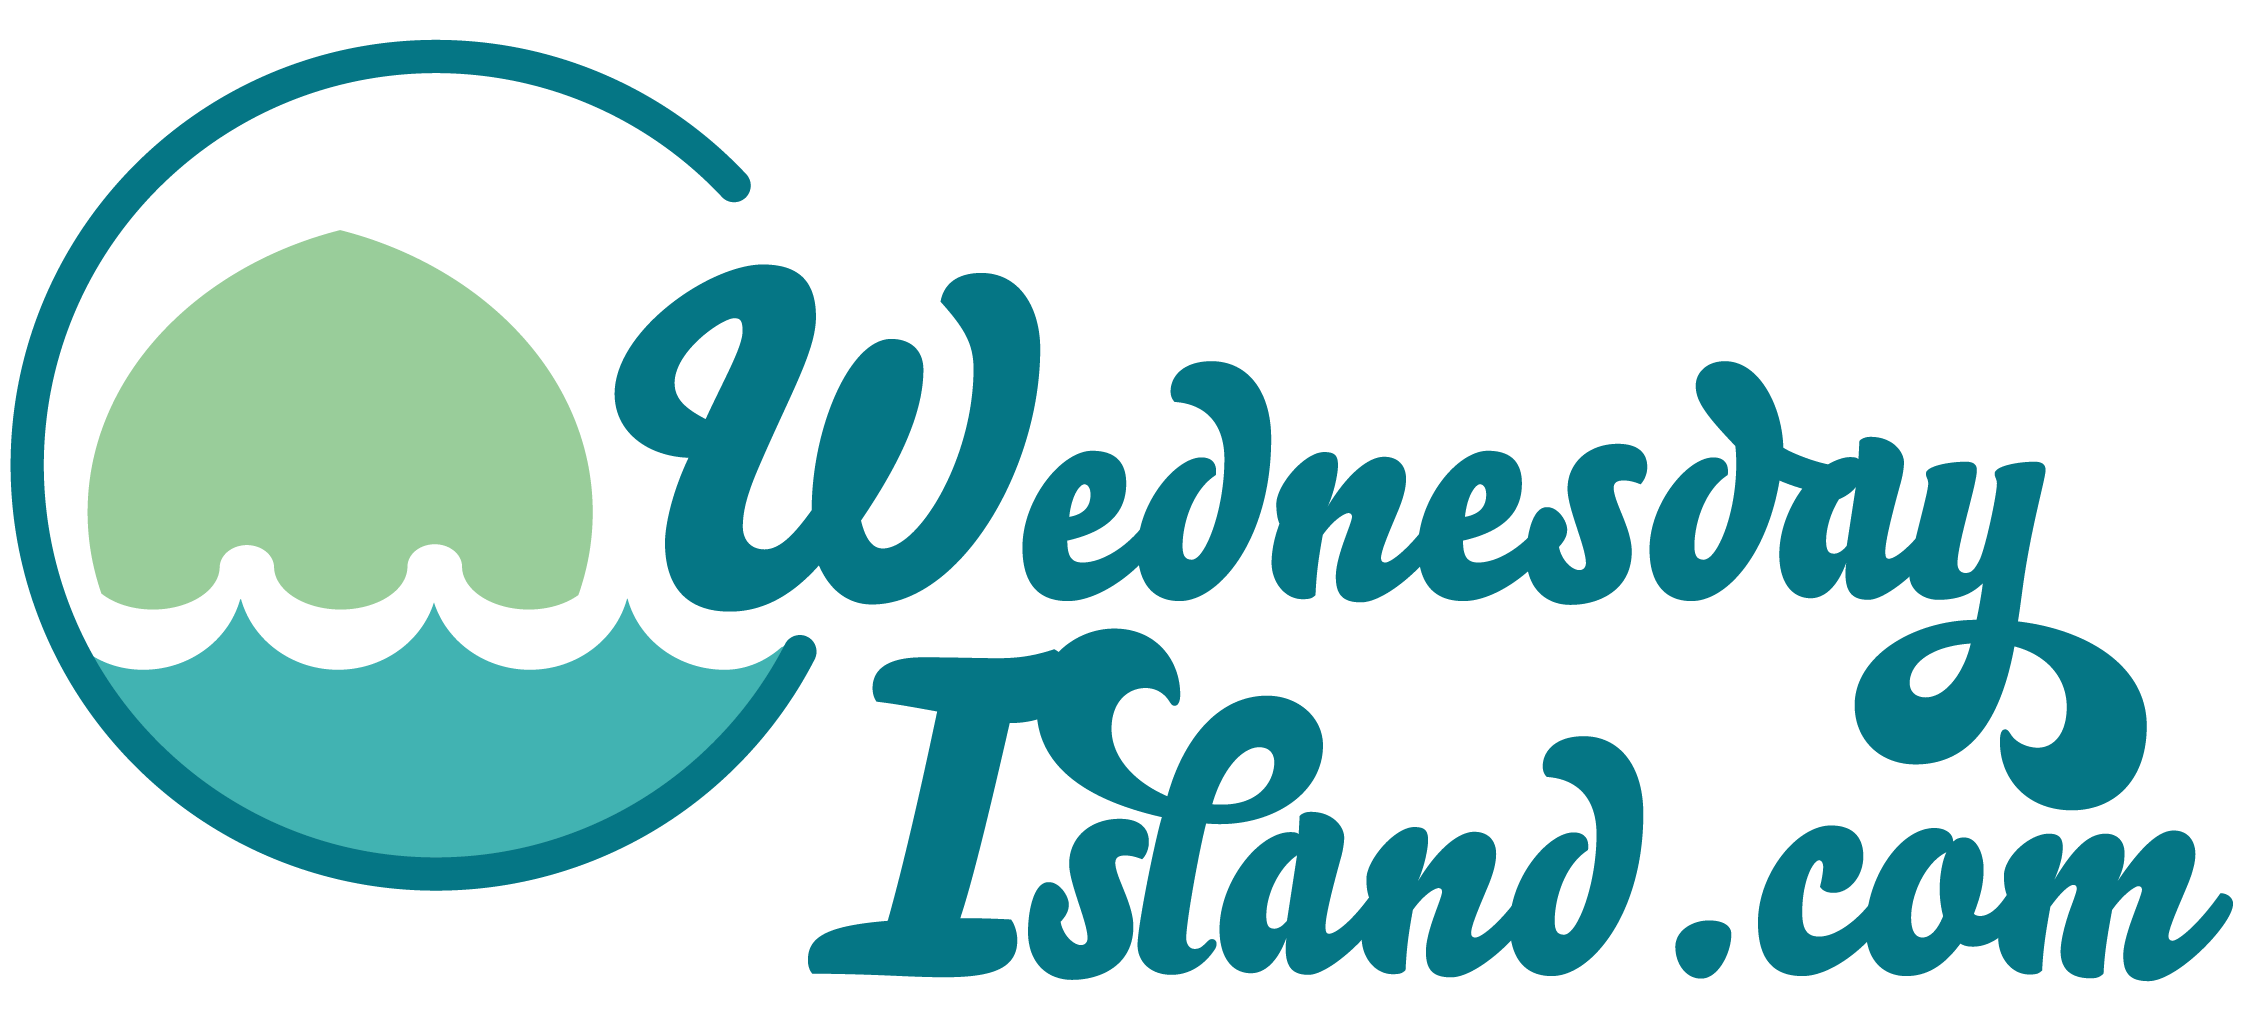 Wednesday Island  |  Nature Blog